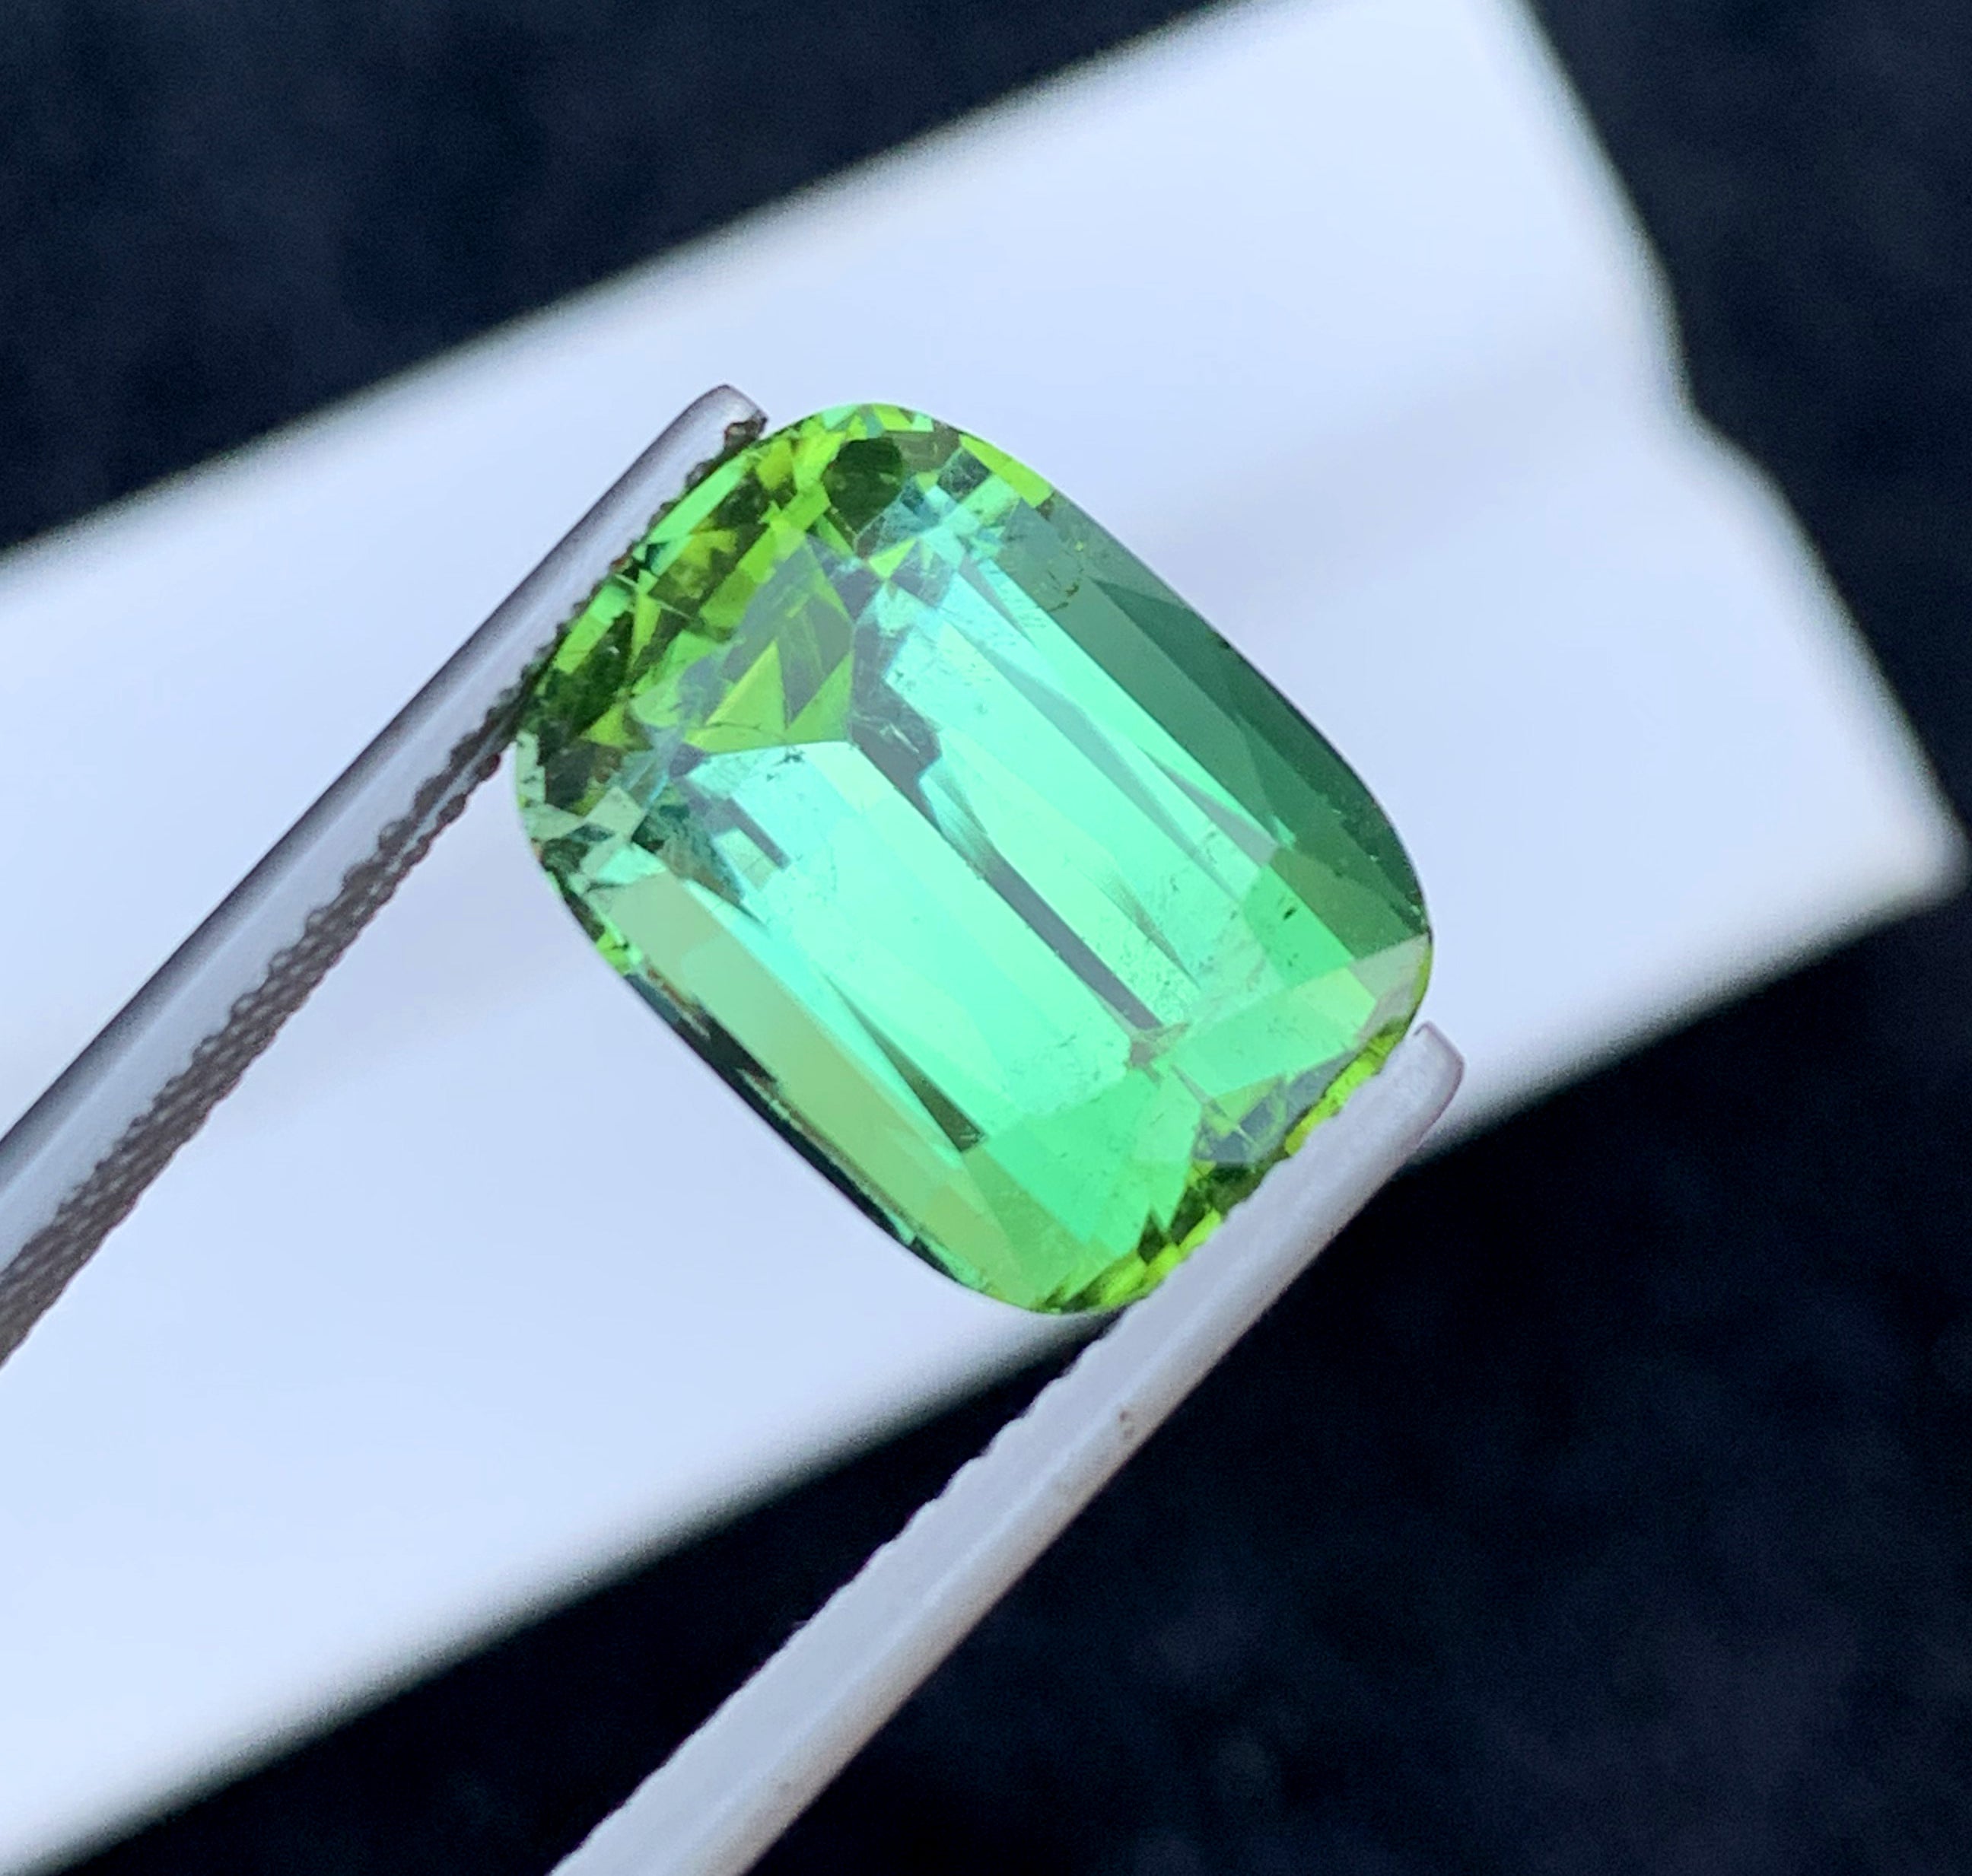 Cusshion Cut Mint Green Tourmaline Gemstone, Loose Gemstone, Faceted Tourmaline, Gemstone Jewelry, Afghan Tourmaline - 9.20 CT